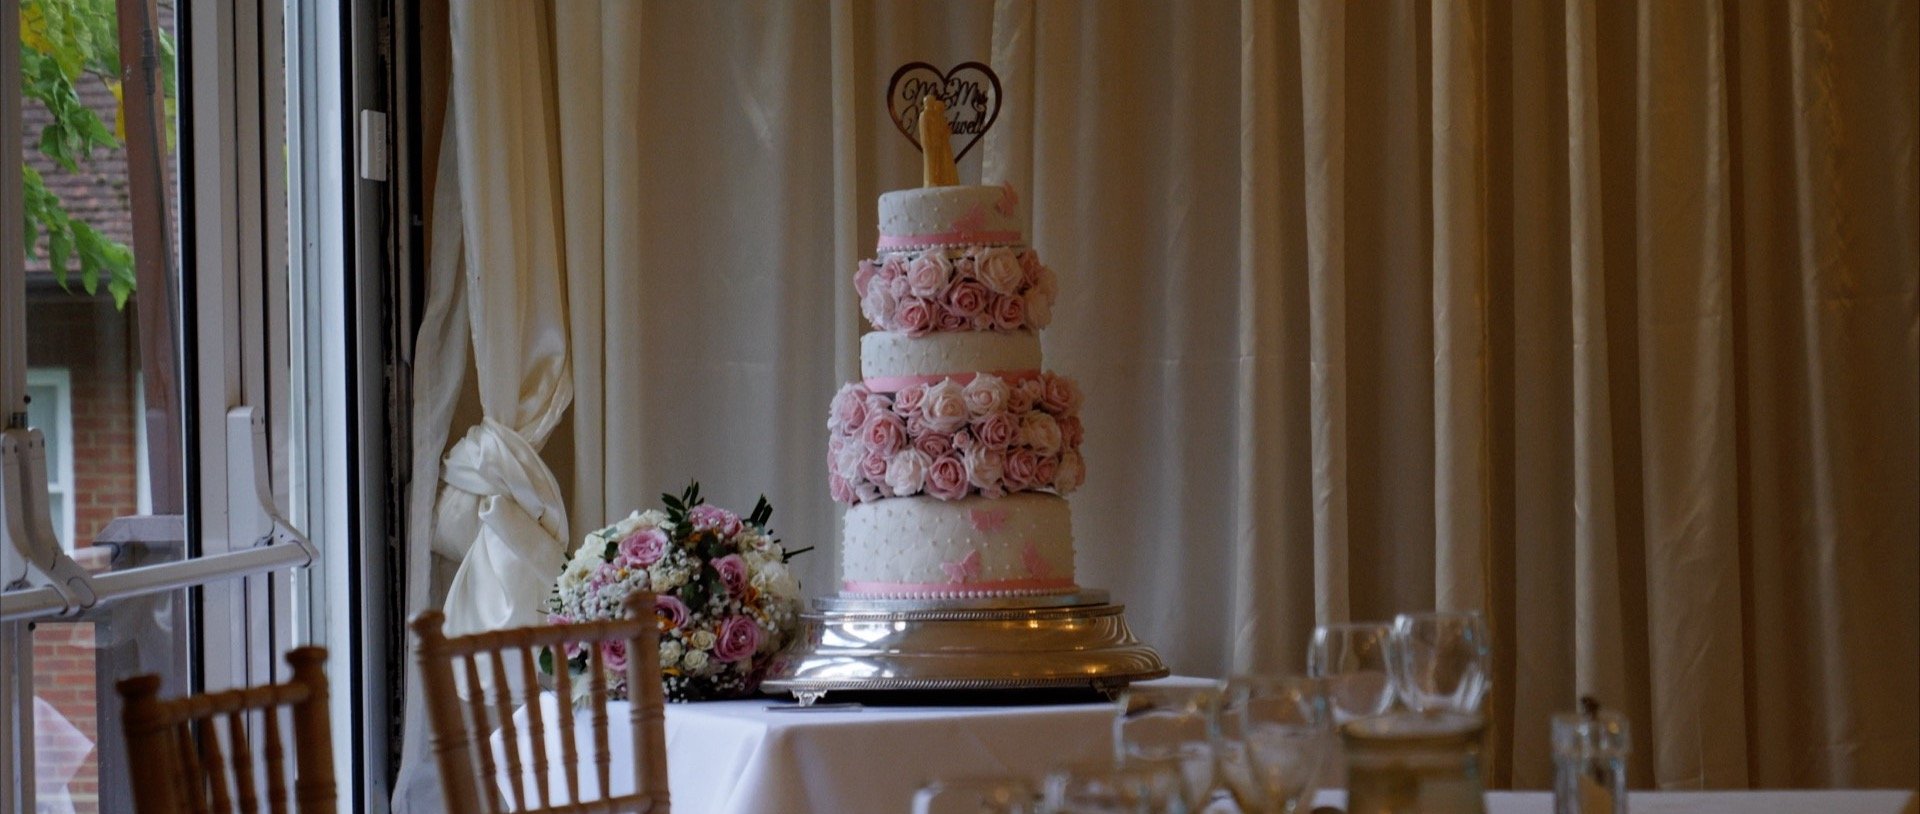 The wedding cake at Mulberry House wedding venue essex.jpg